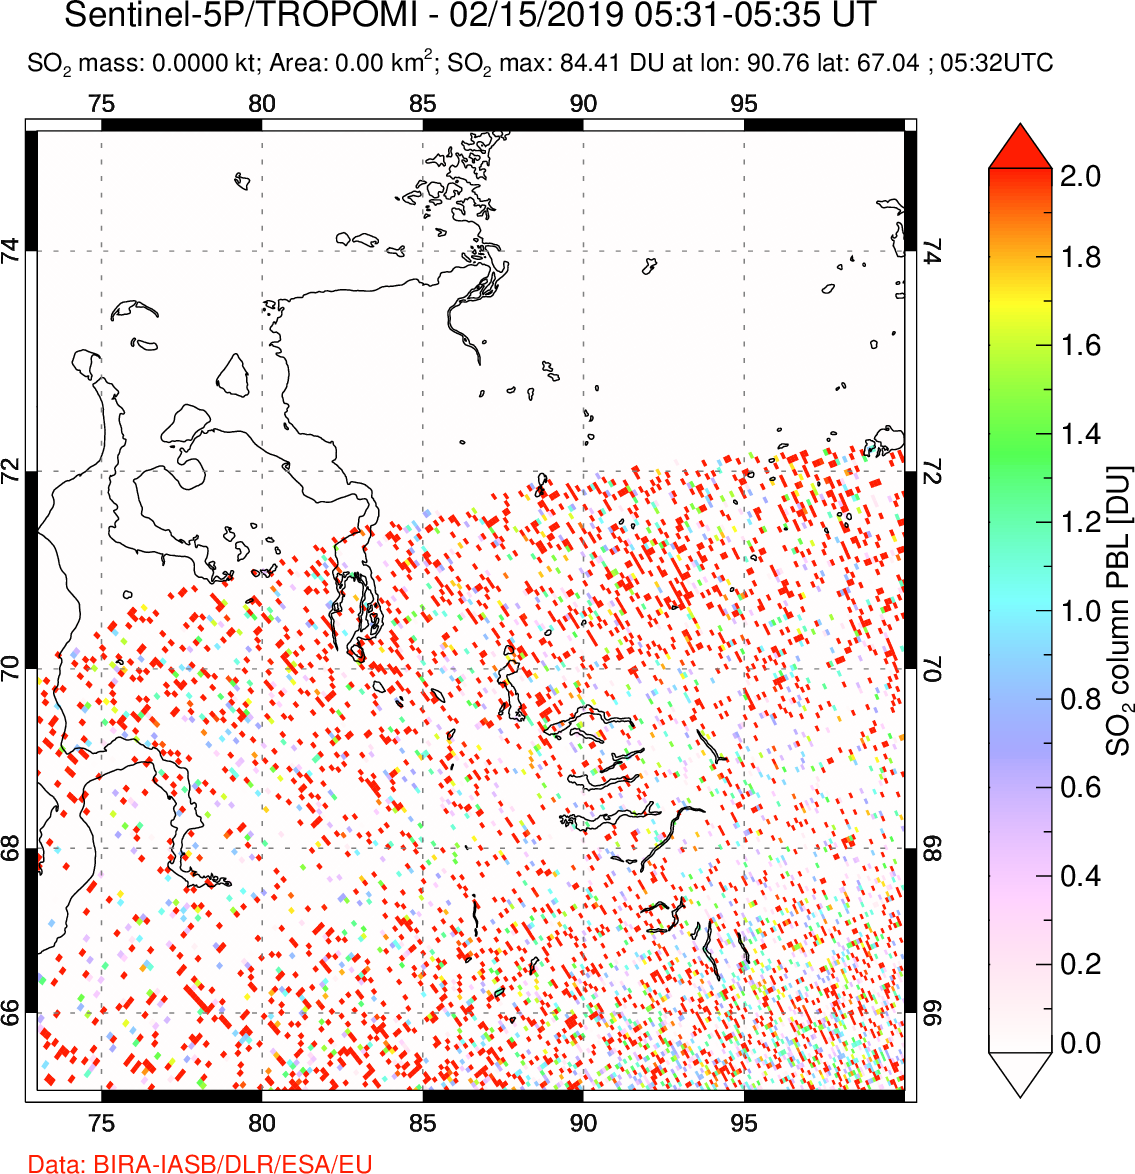 A sulfur dioxide image over Norilsk, Russian Federation on Feb 15, 2019.